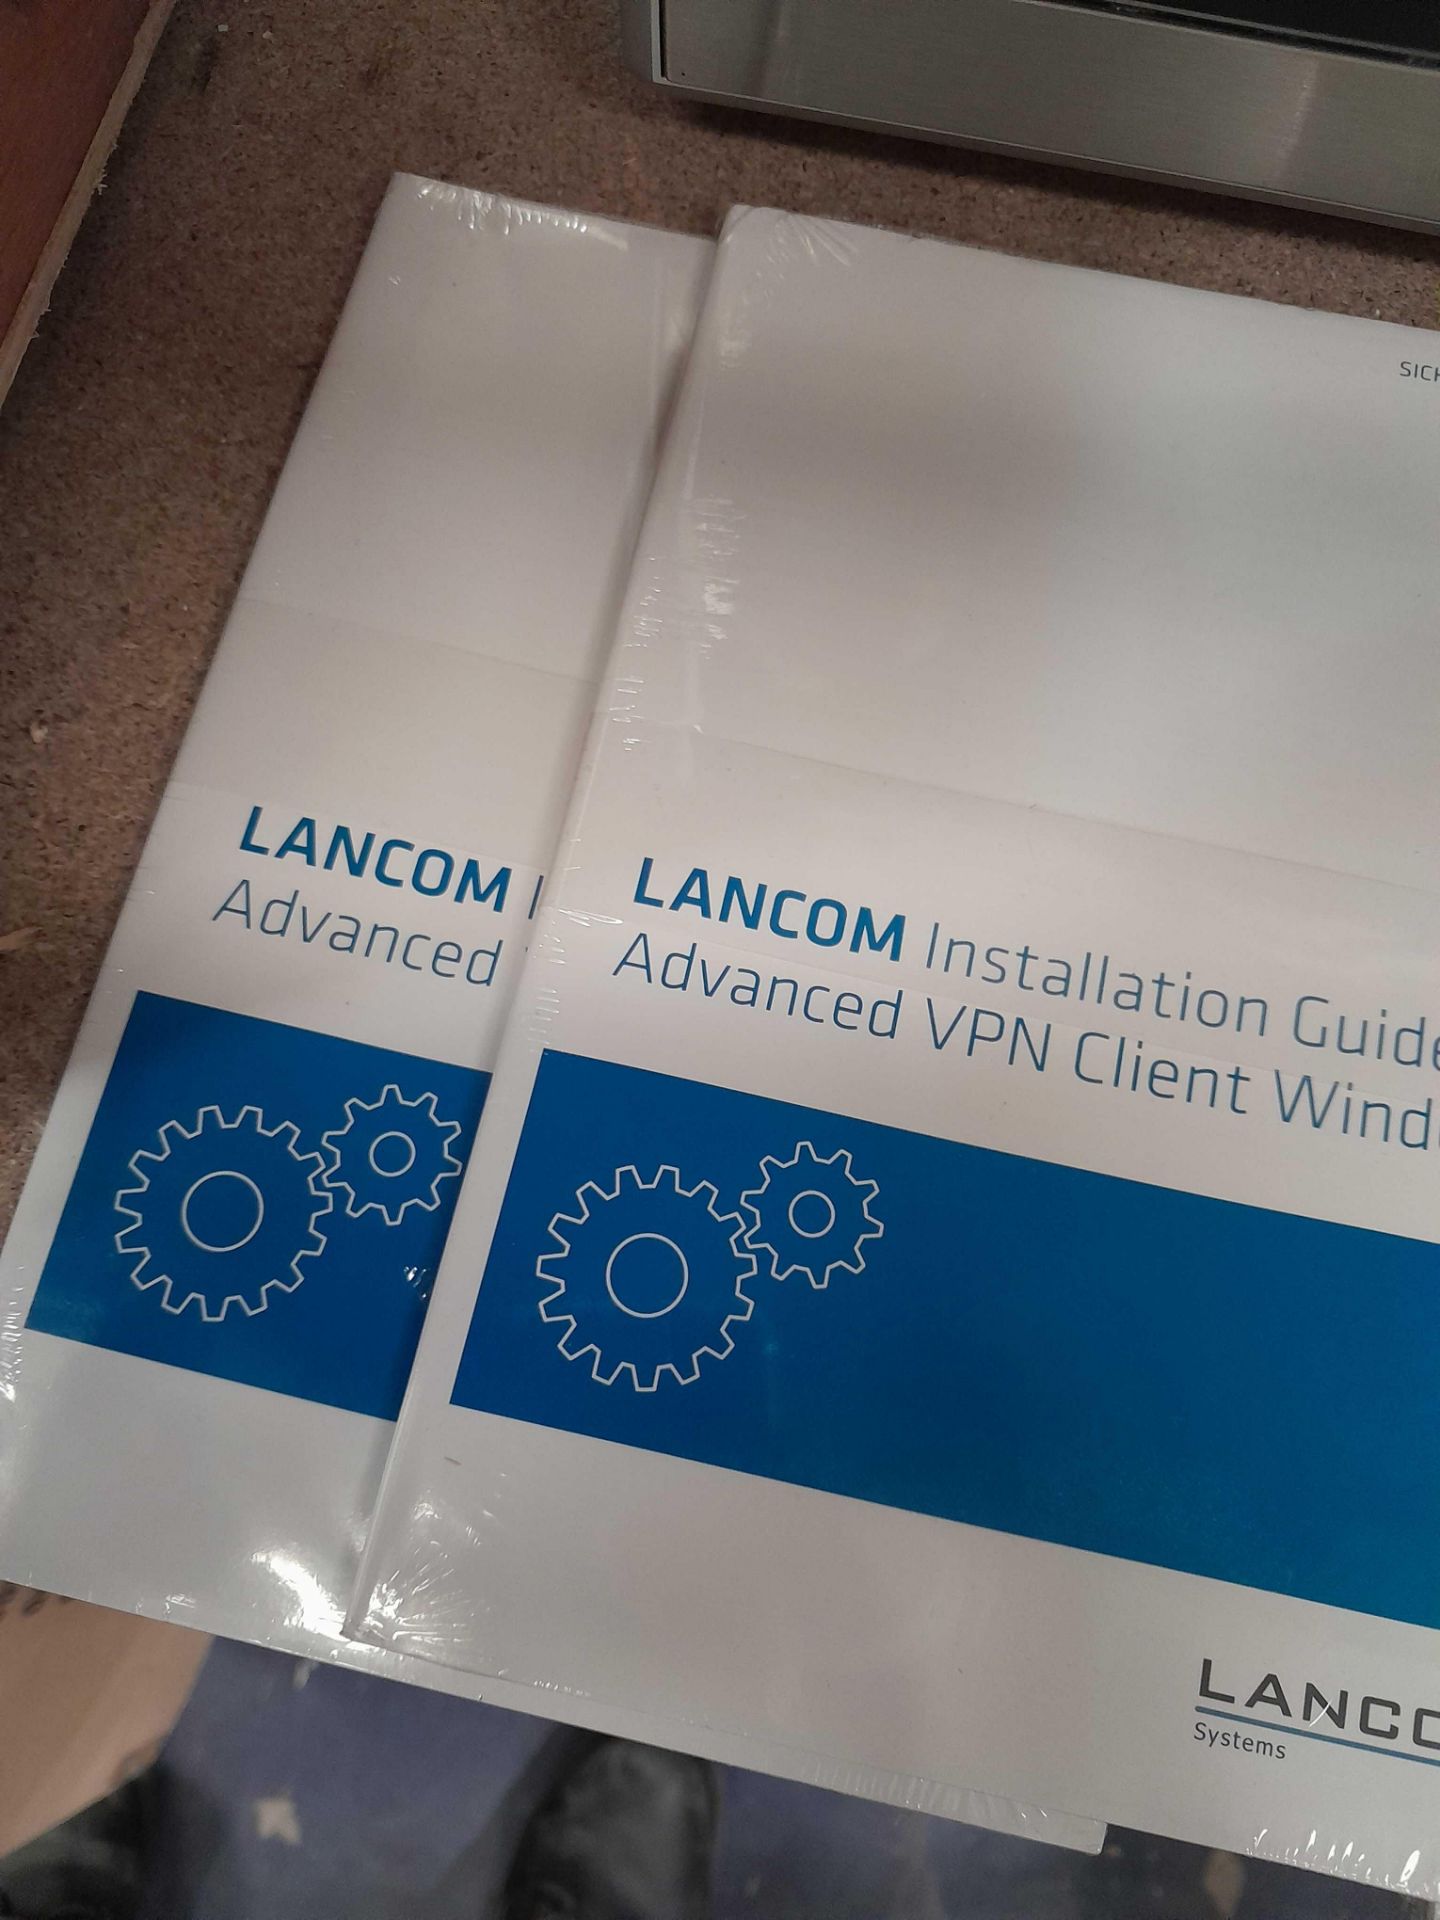 RRP £220 Brand New Lancom Installation Guide Advanced VPN Windows - Image 2 of 2